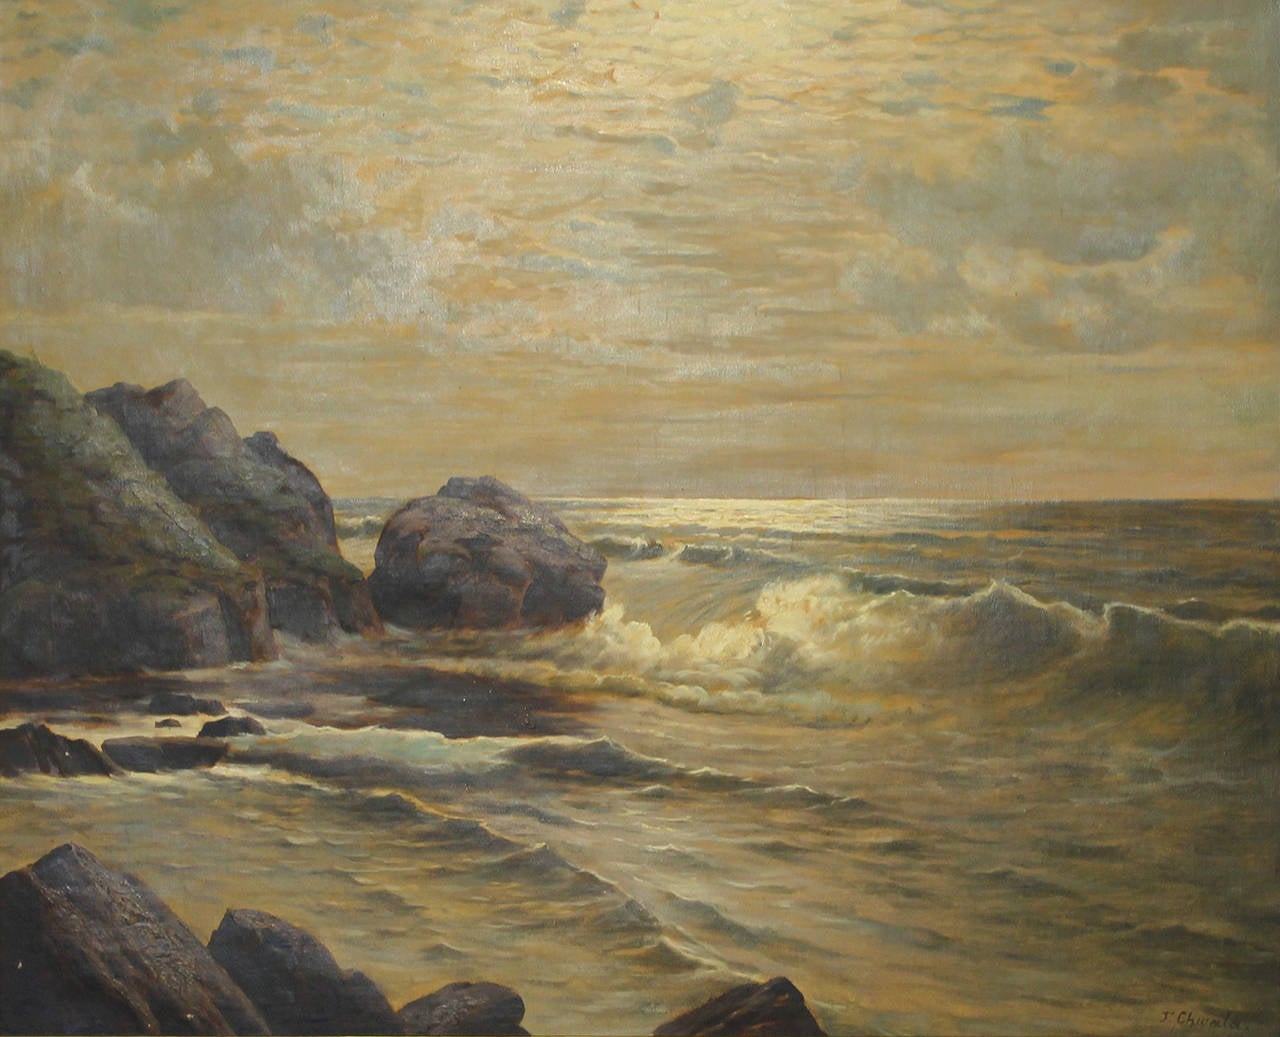 Seascape oil on canvas framed painting by Austrian artist Fritz Chwala (1872-1936).

Framed: 34.5